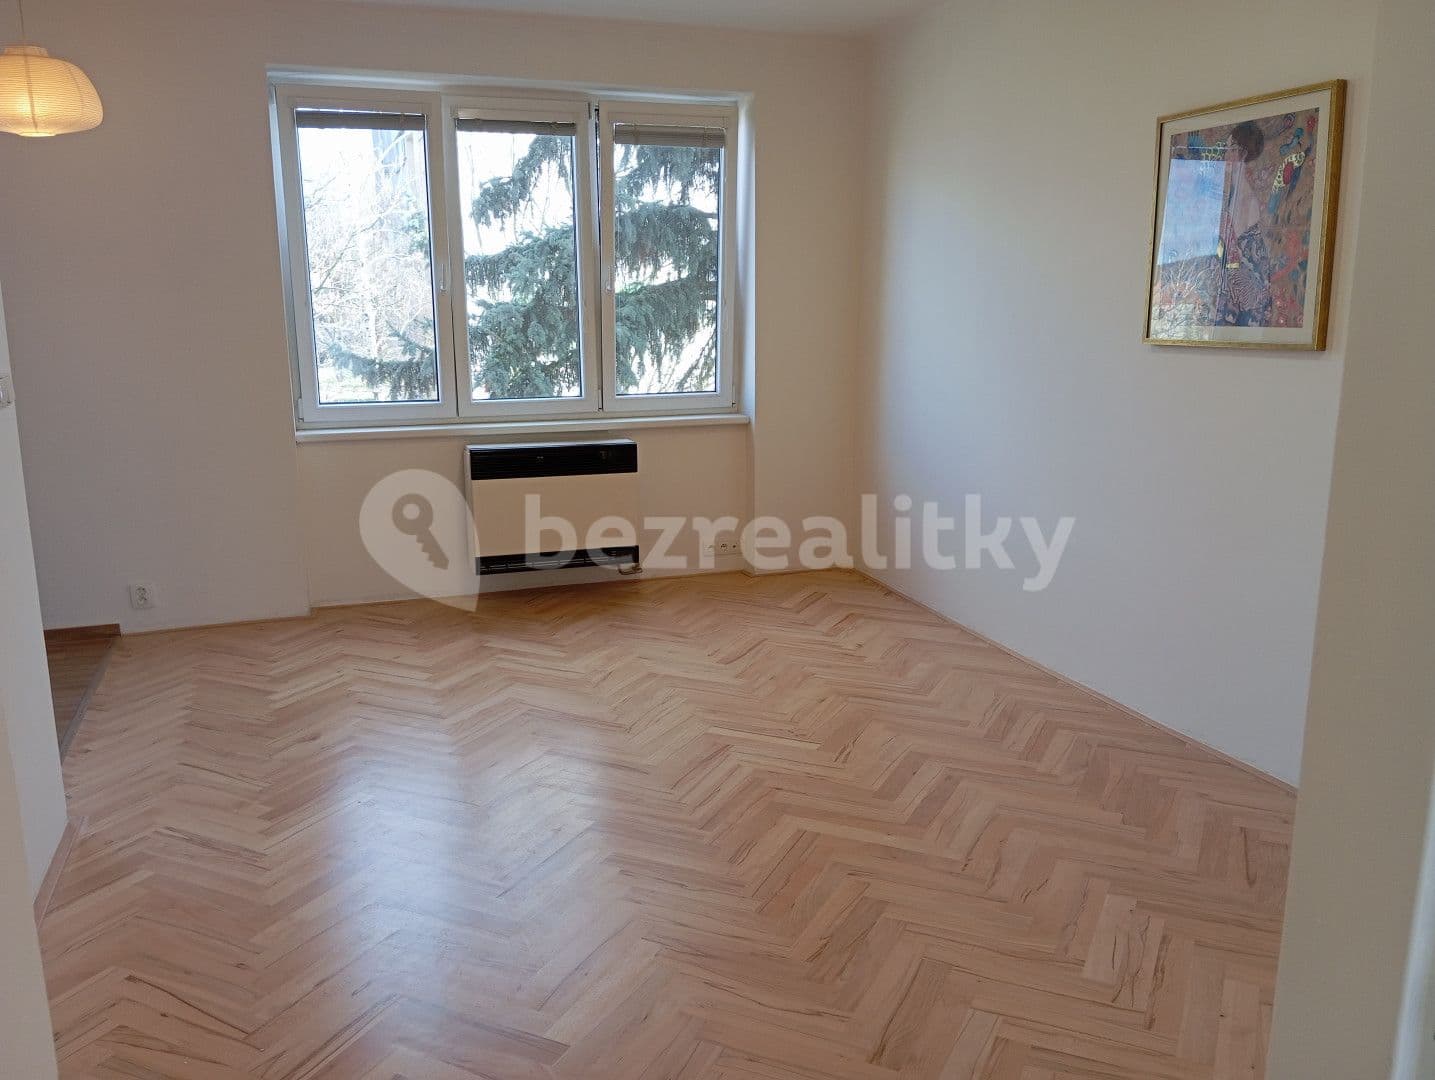 Predaj bytu 2-izbový 52 m², Slovenského národního povstání, Louny, Ústecký kraj